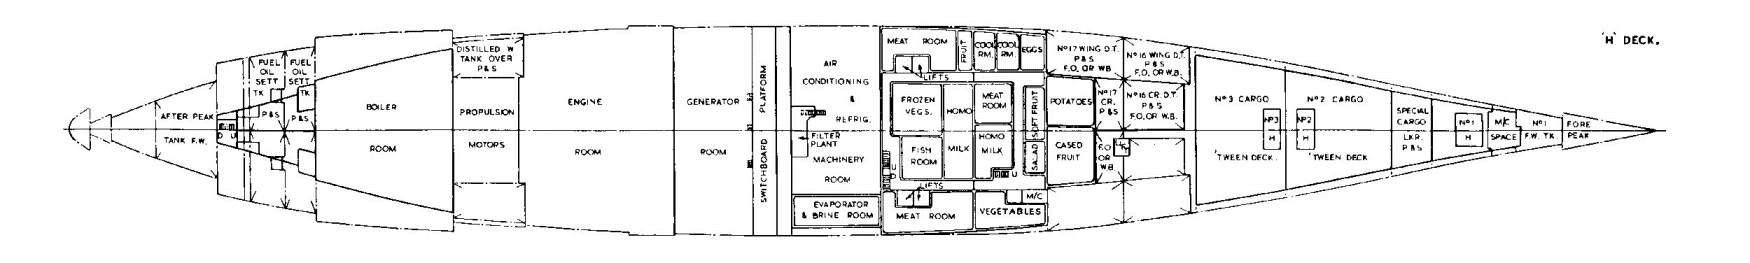 Canberra Plan - H Deck.JPG